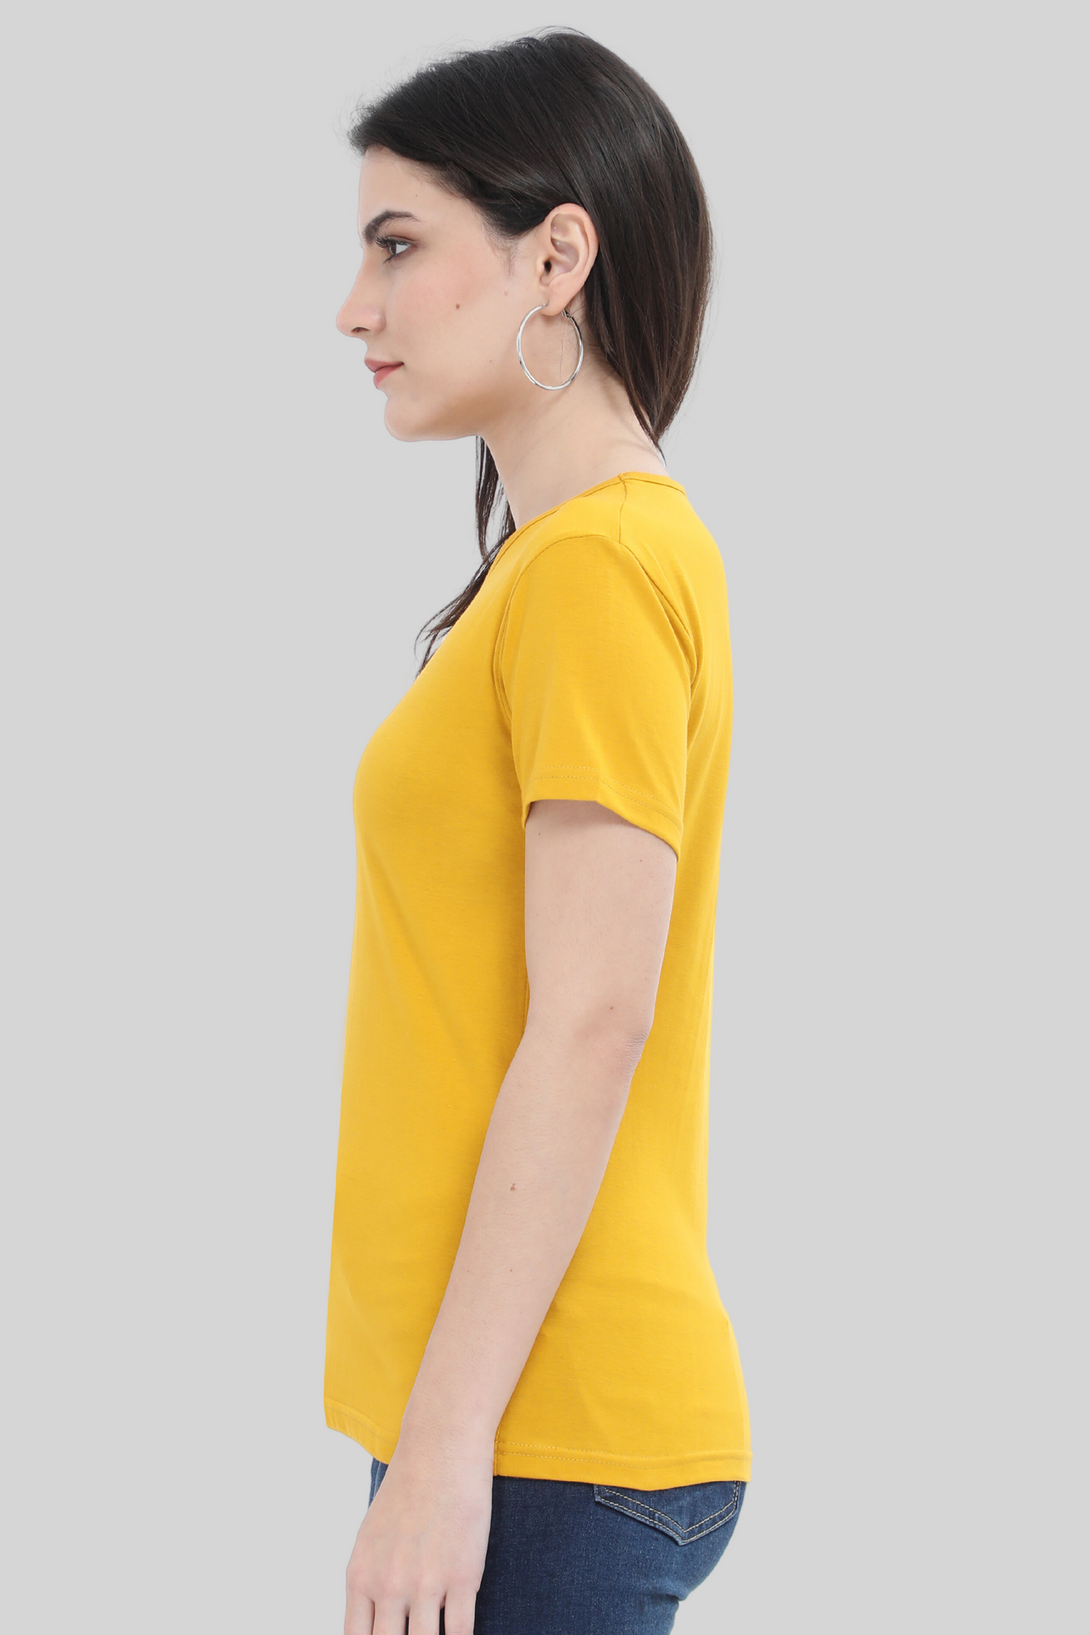 Mustard Yellow Scoop Neck T-Shirt For Women - WowWaves - 2